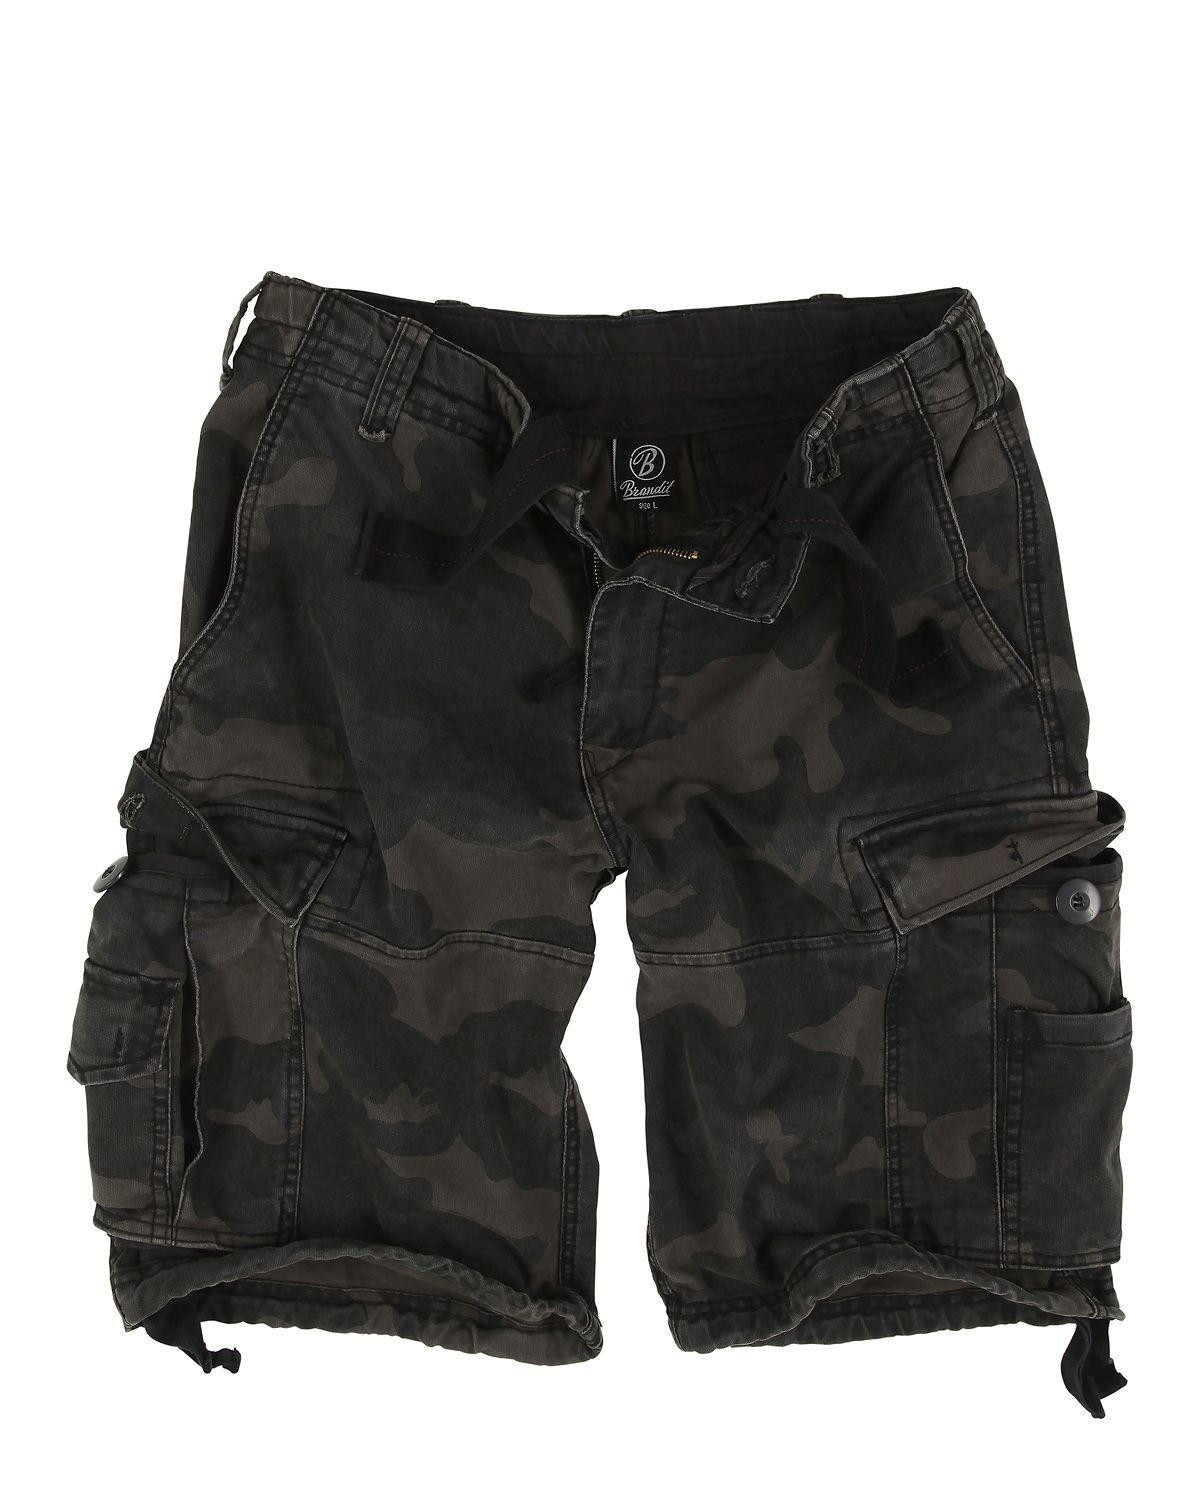 Brandit Vintage Shorts (Black Camo, 2XL)